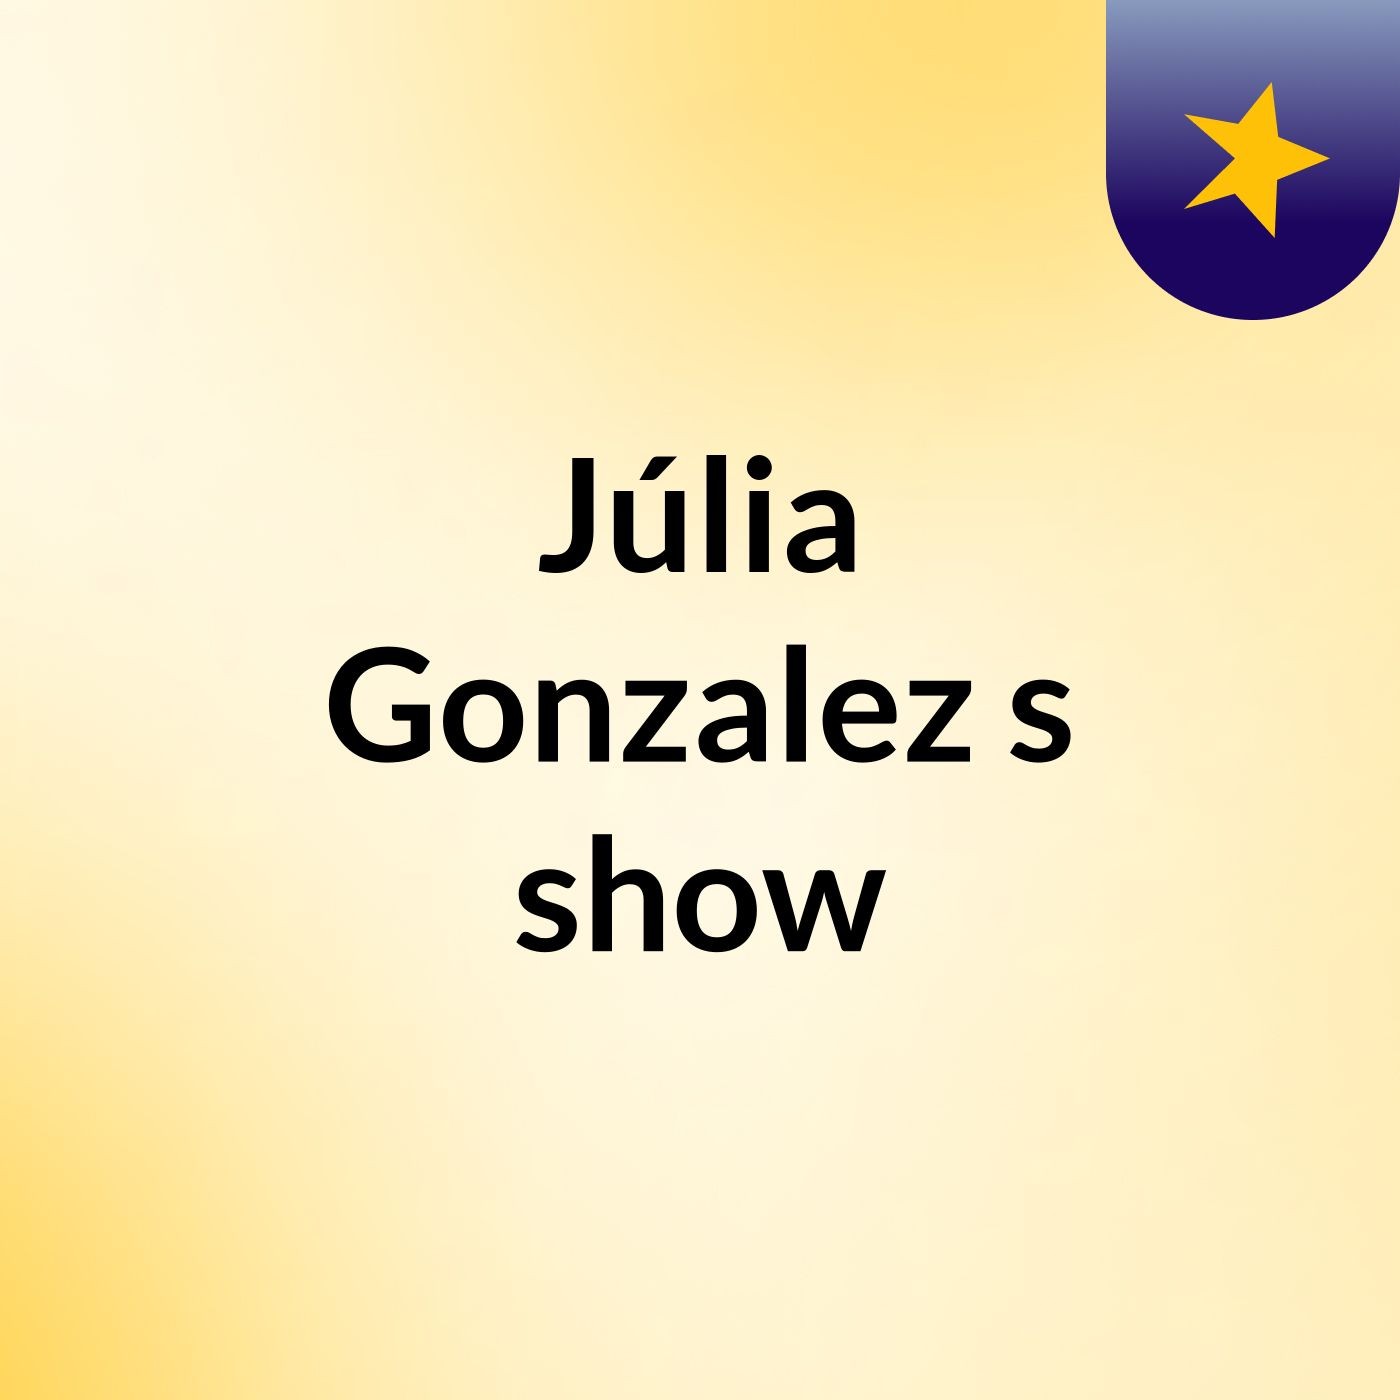 Júlia Gonzalez's show